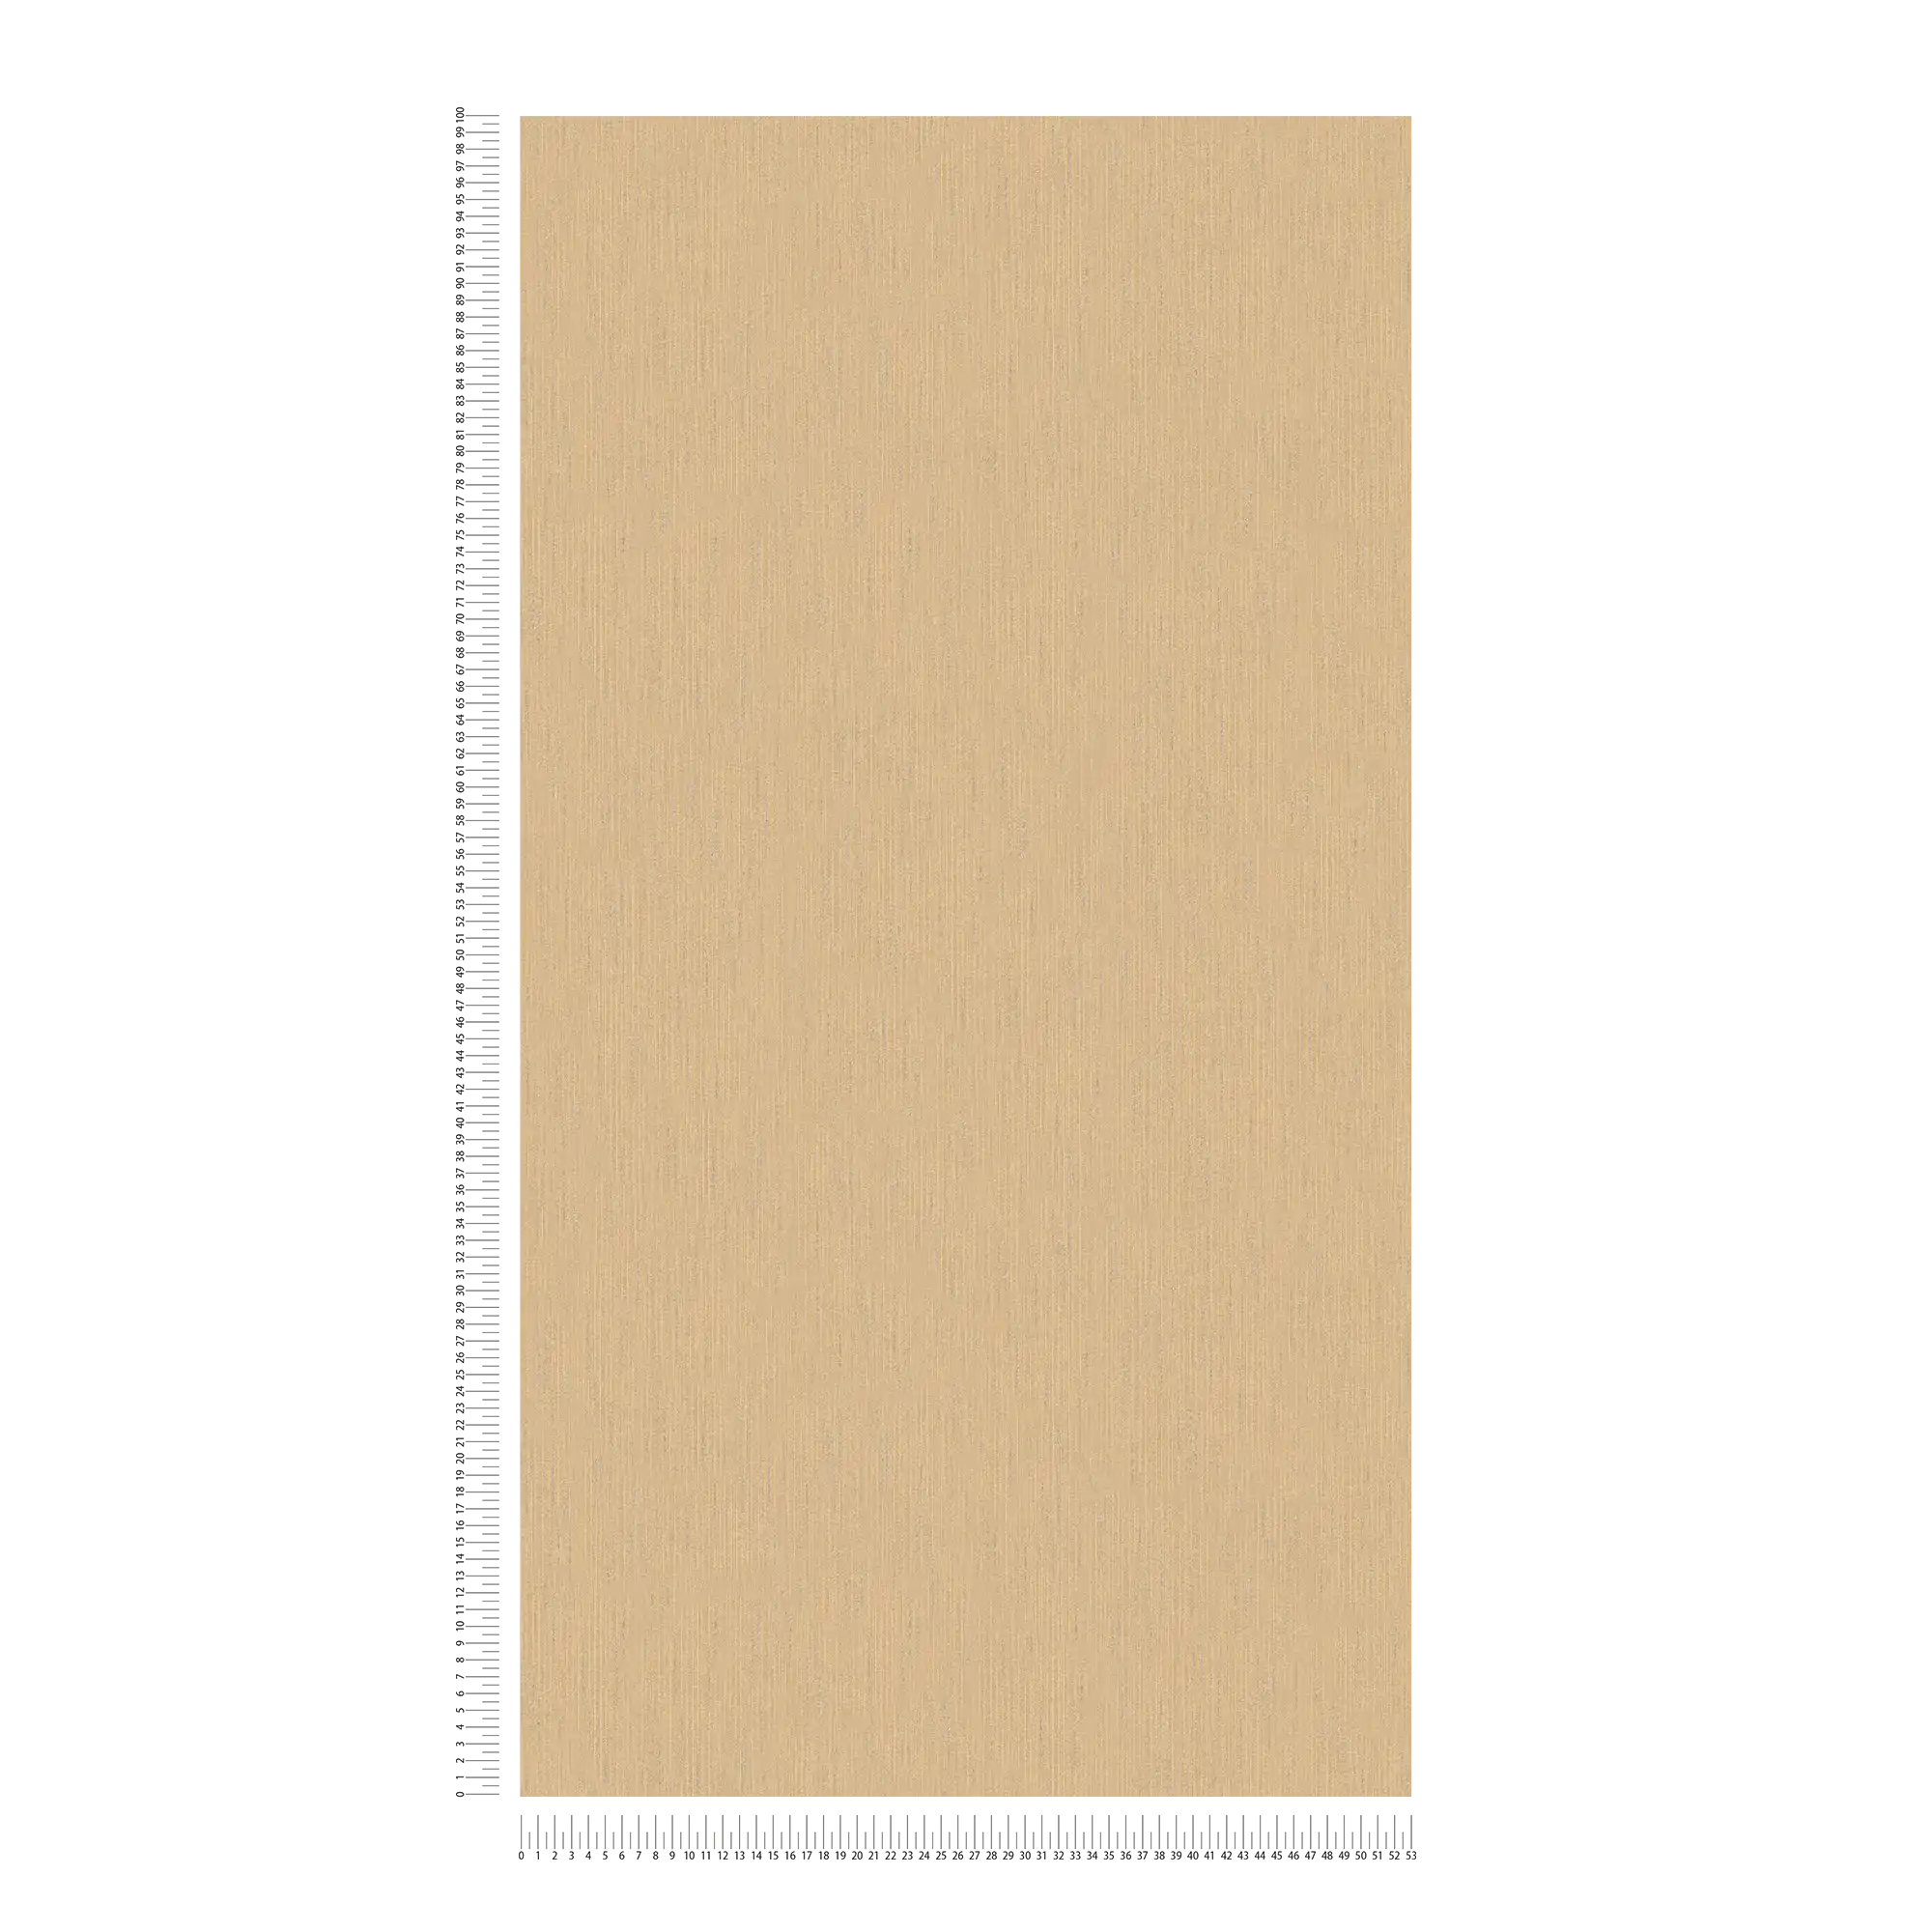             Carta da parati Sand optics beige screziato con struttura tessile
        